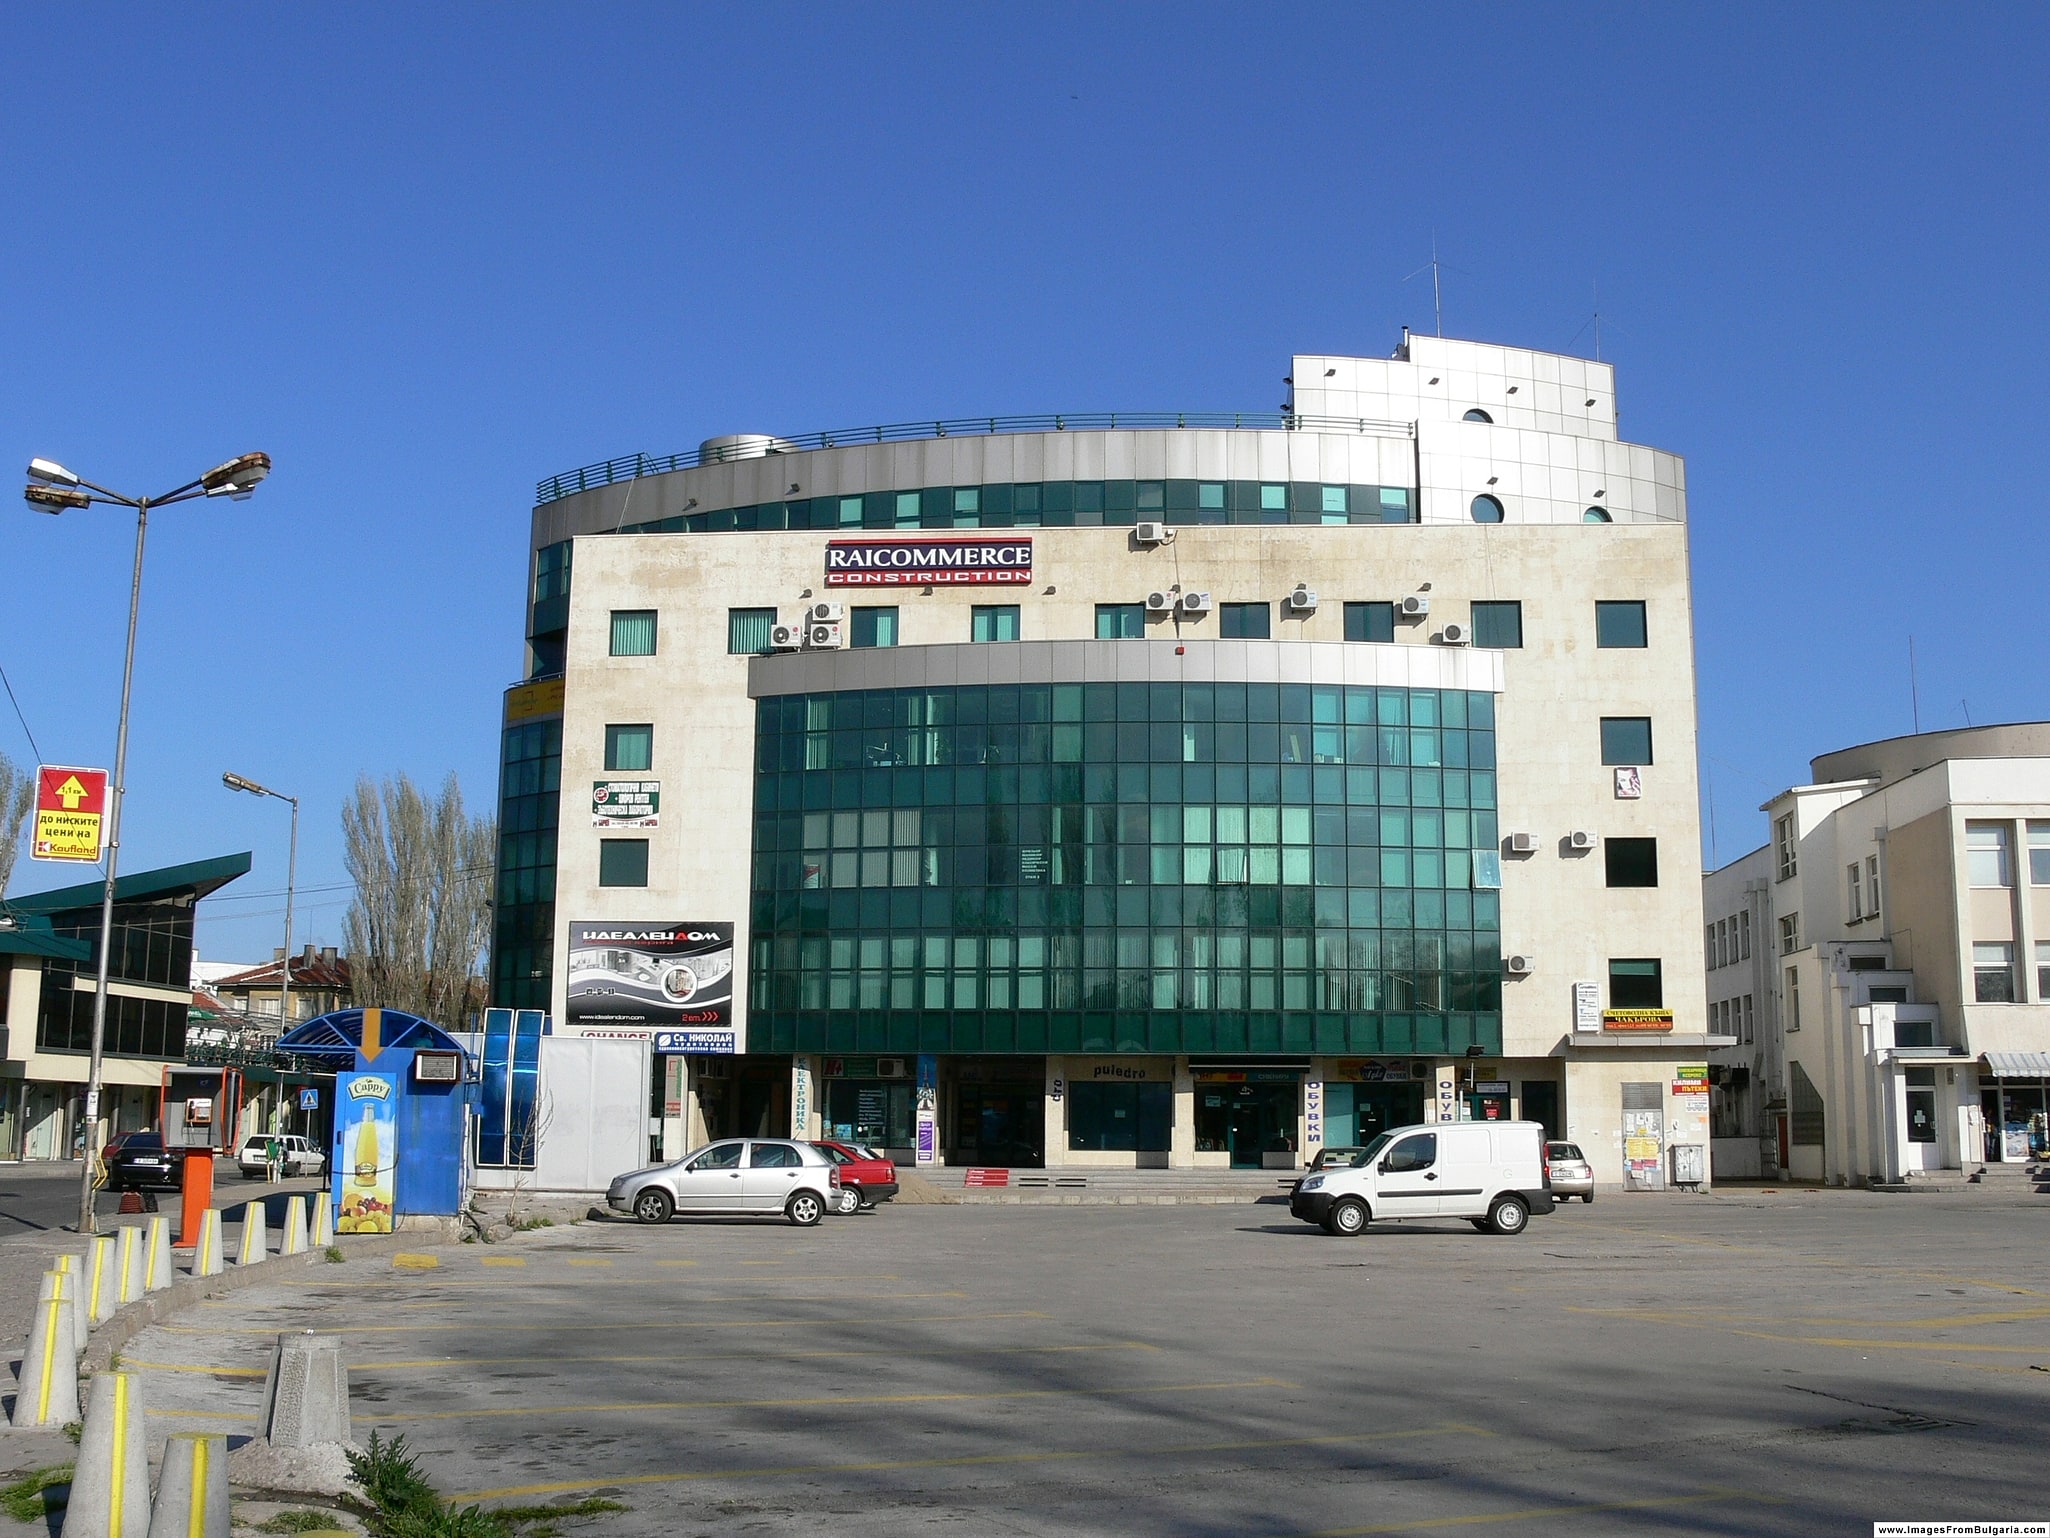 Haskovo, Bulgaria